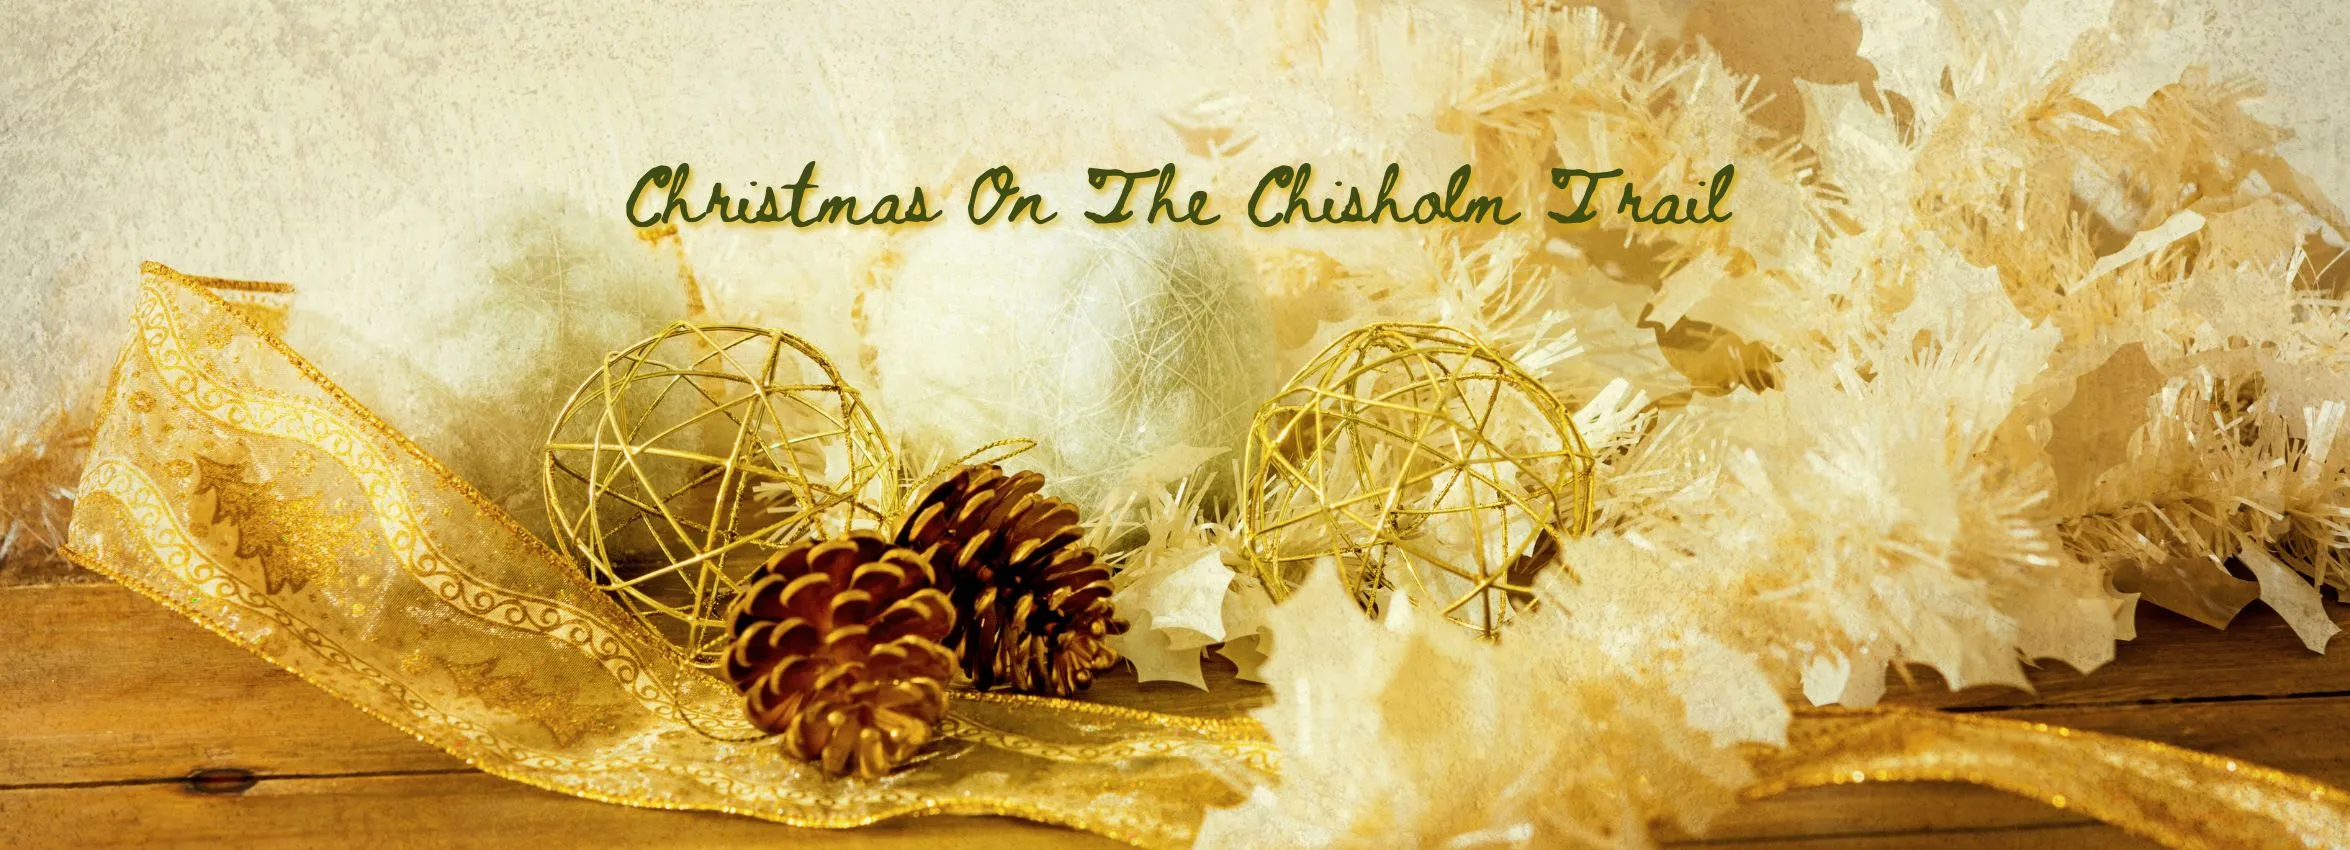 Christmas-On-The-Chisholm-Trail_Desktop_ET